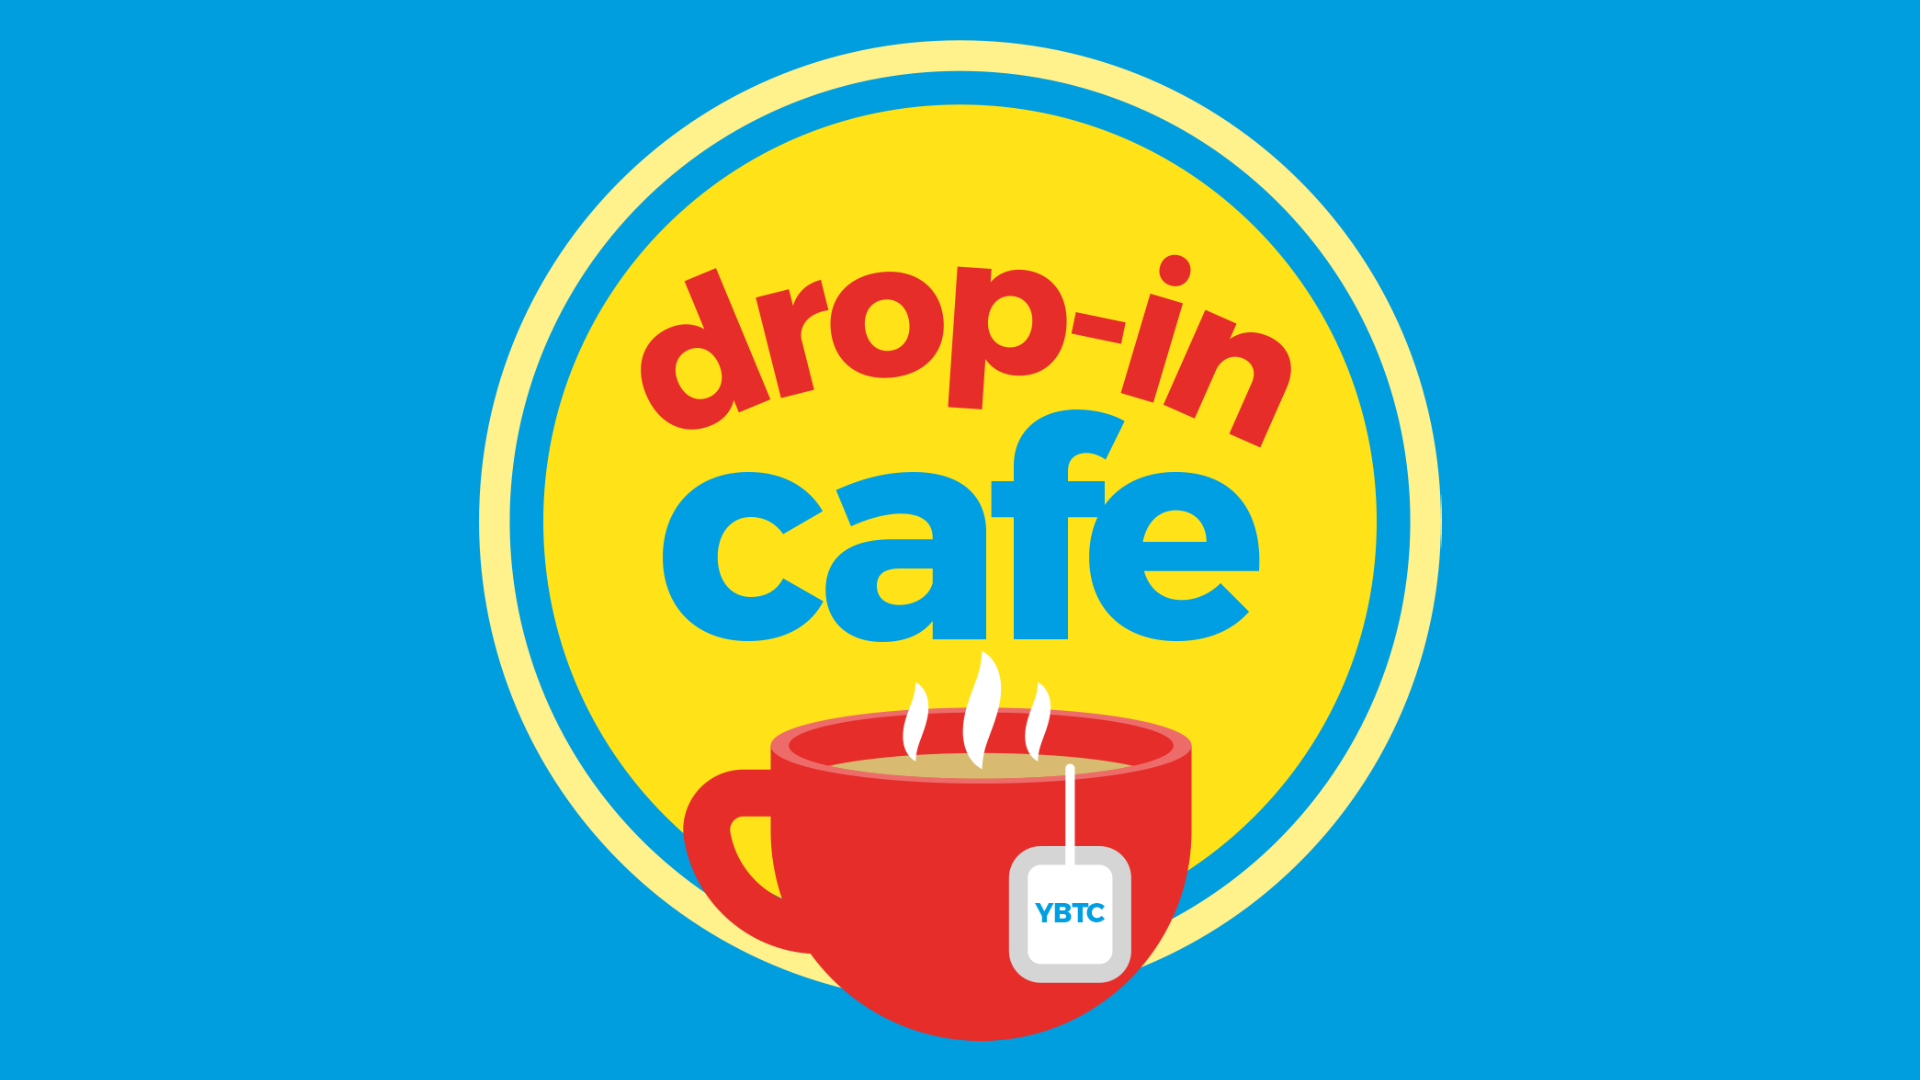 Hull Drop-In Café